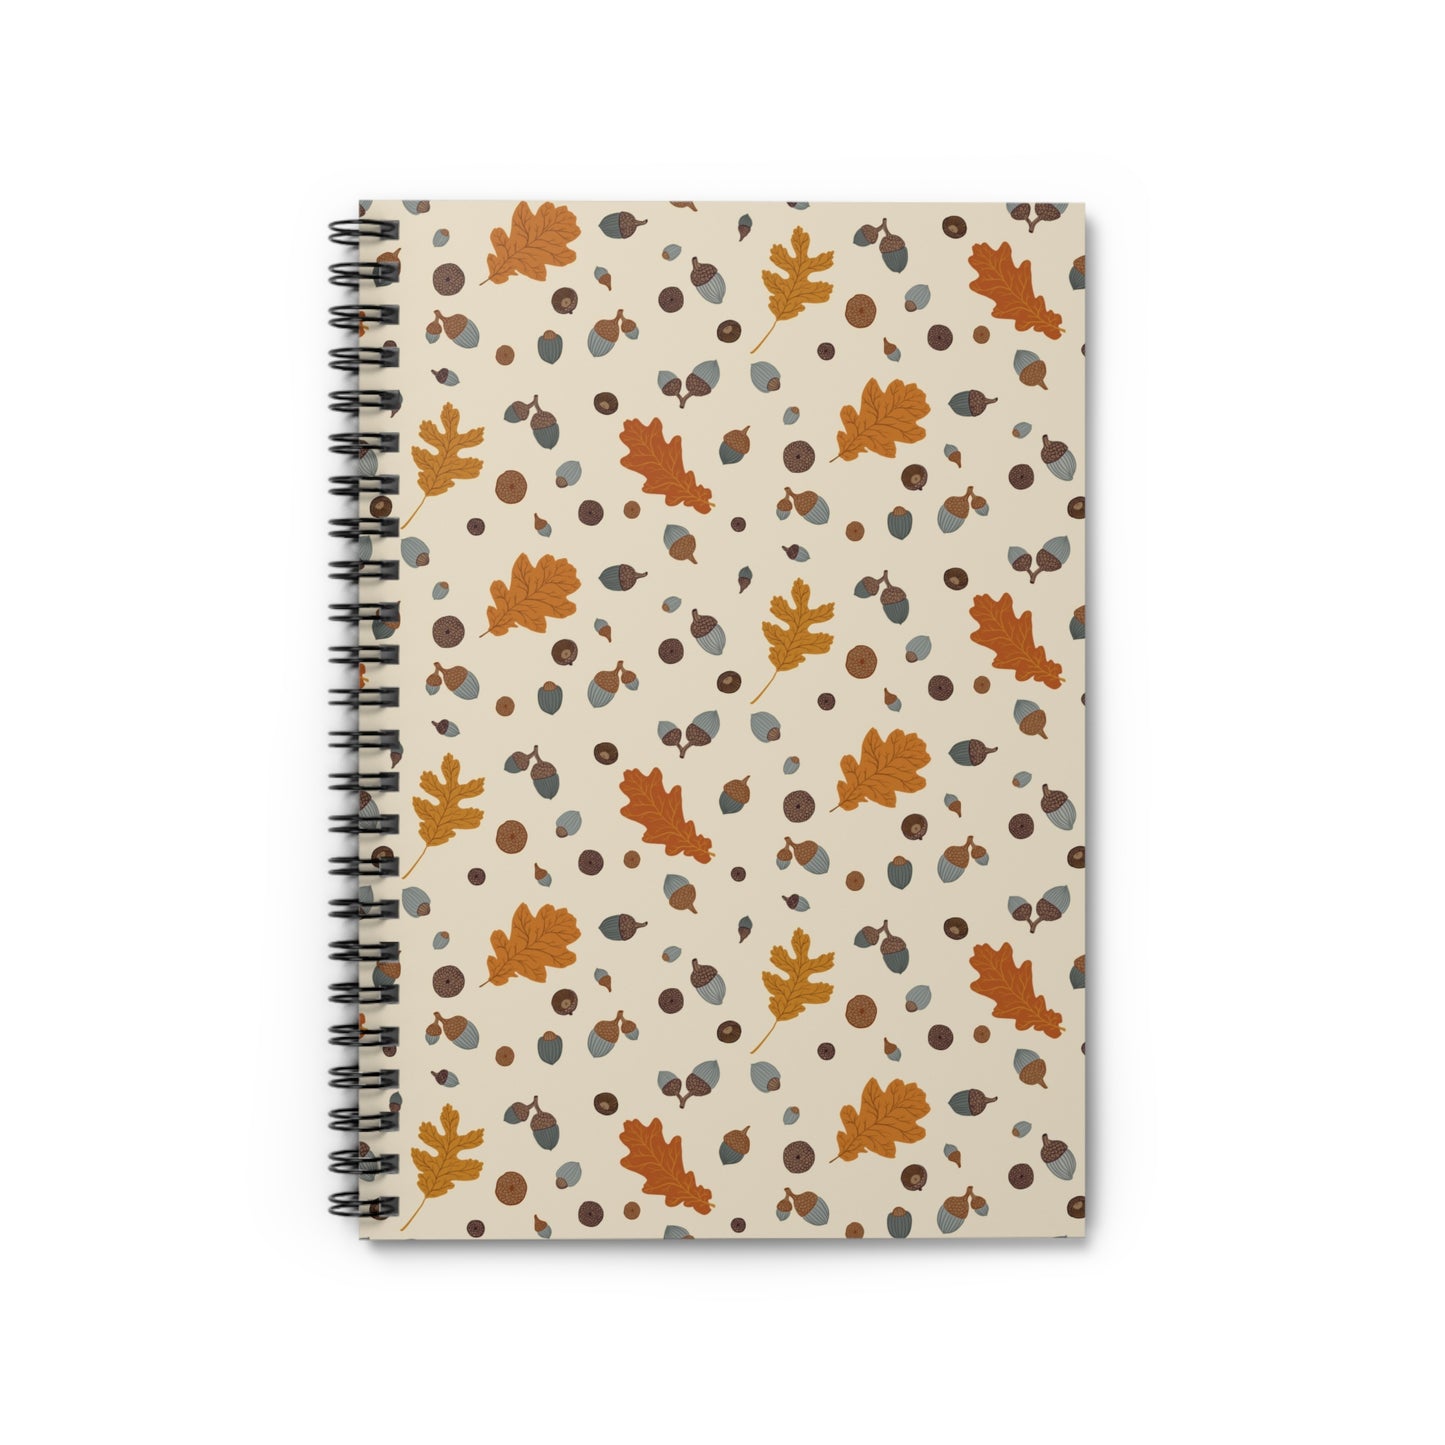 Autumn Acorns Spiral Notebook - Ruled Line